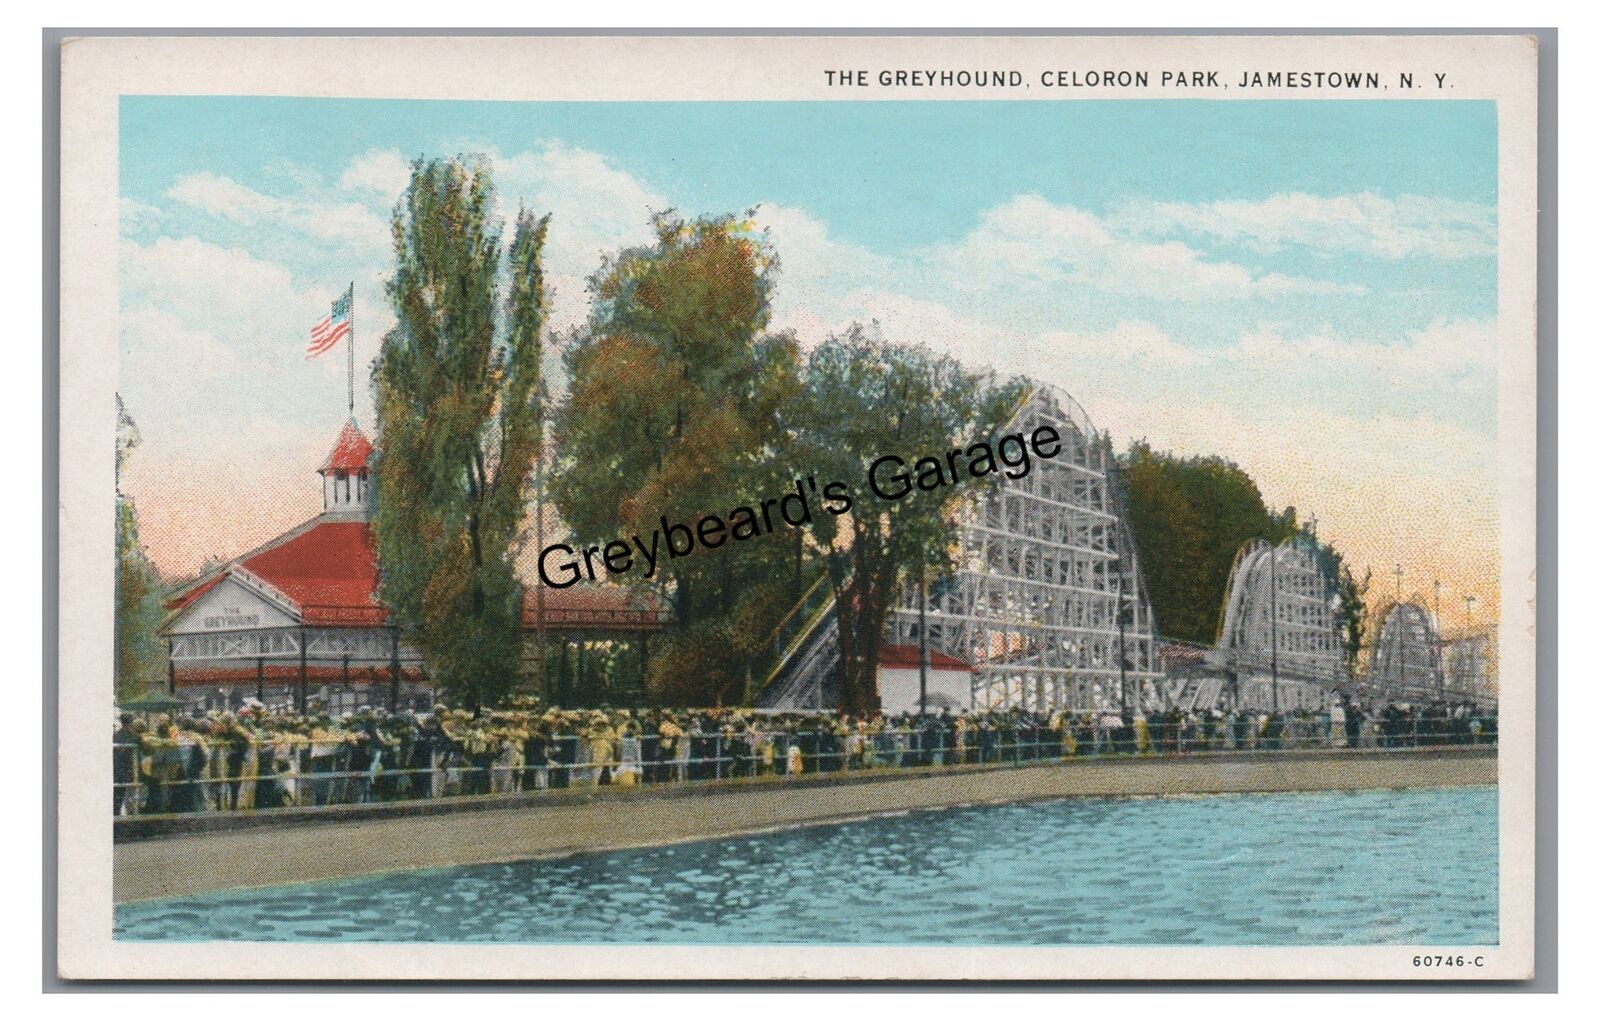 The Greyhound Roller Coaster Celoron Park Amusement JAMESTOWN NY Postcard